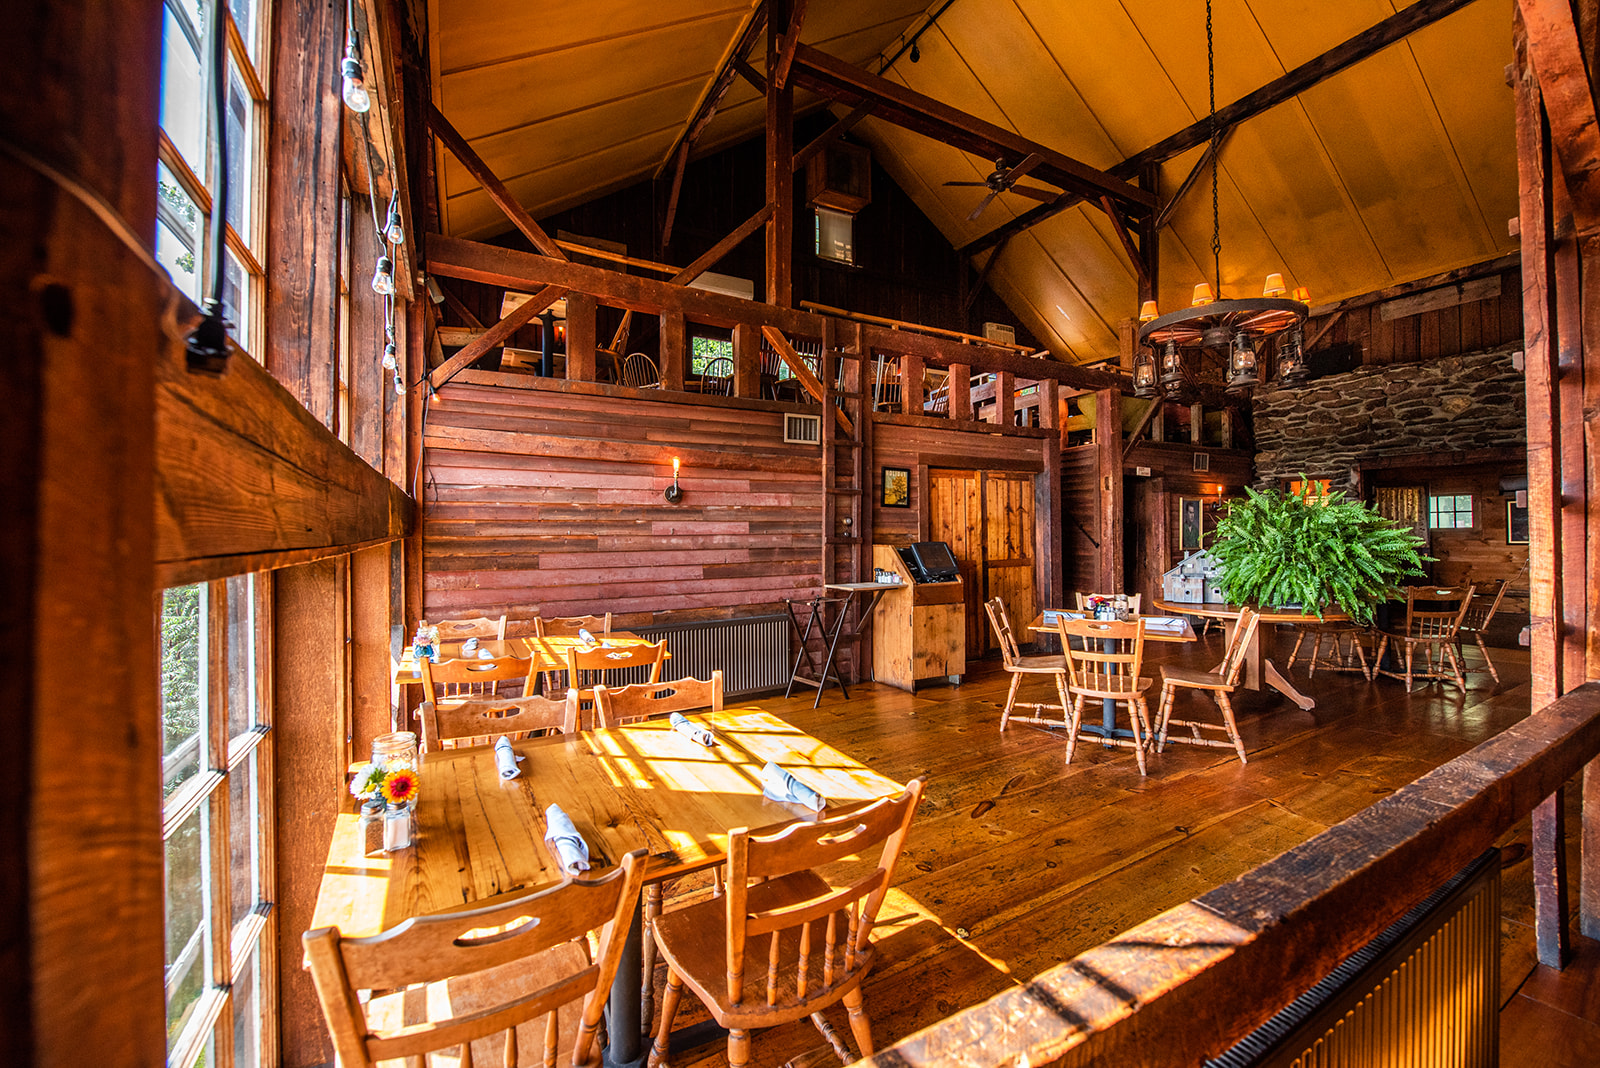 Place - The Barn Restaurant & Tavern